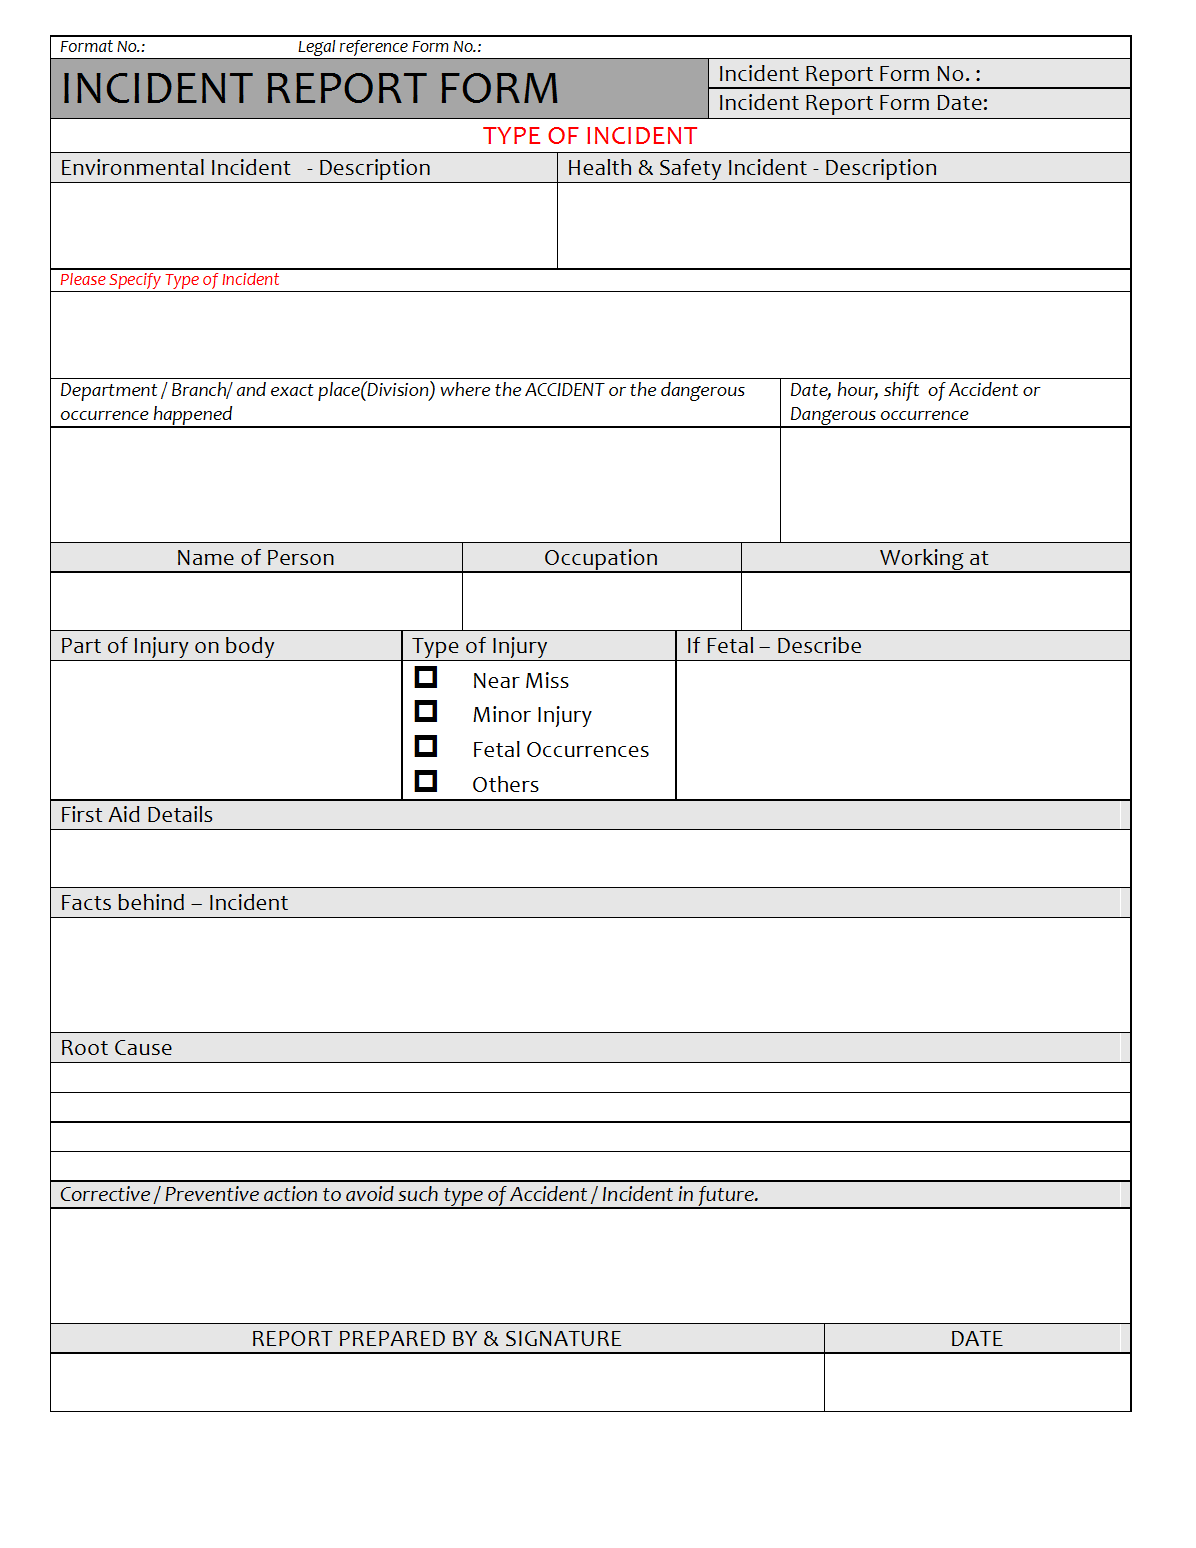 patient-report-sheet-templates-hq-printable-documents-riset